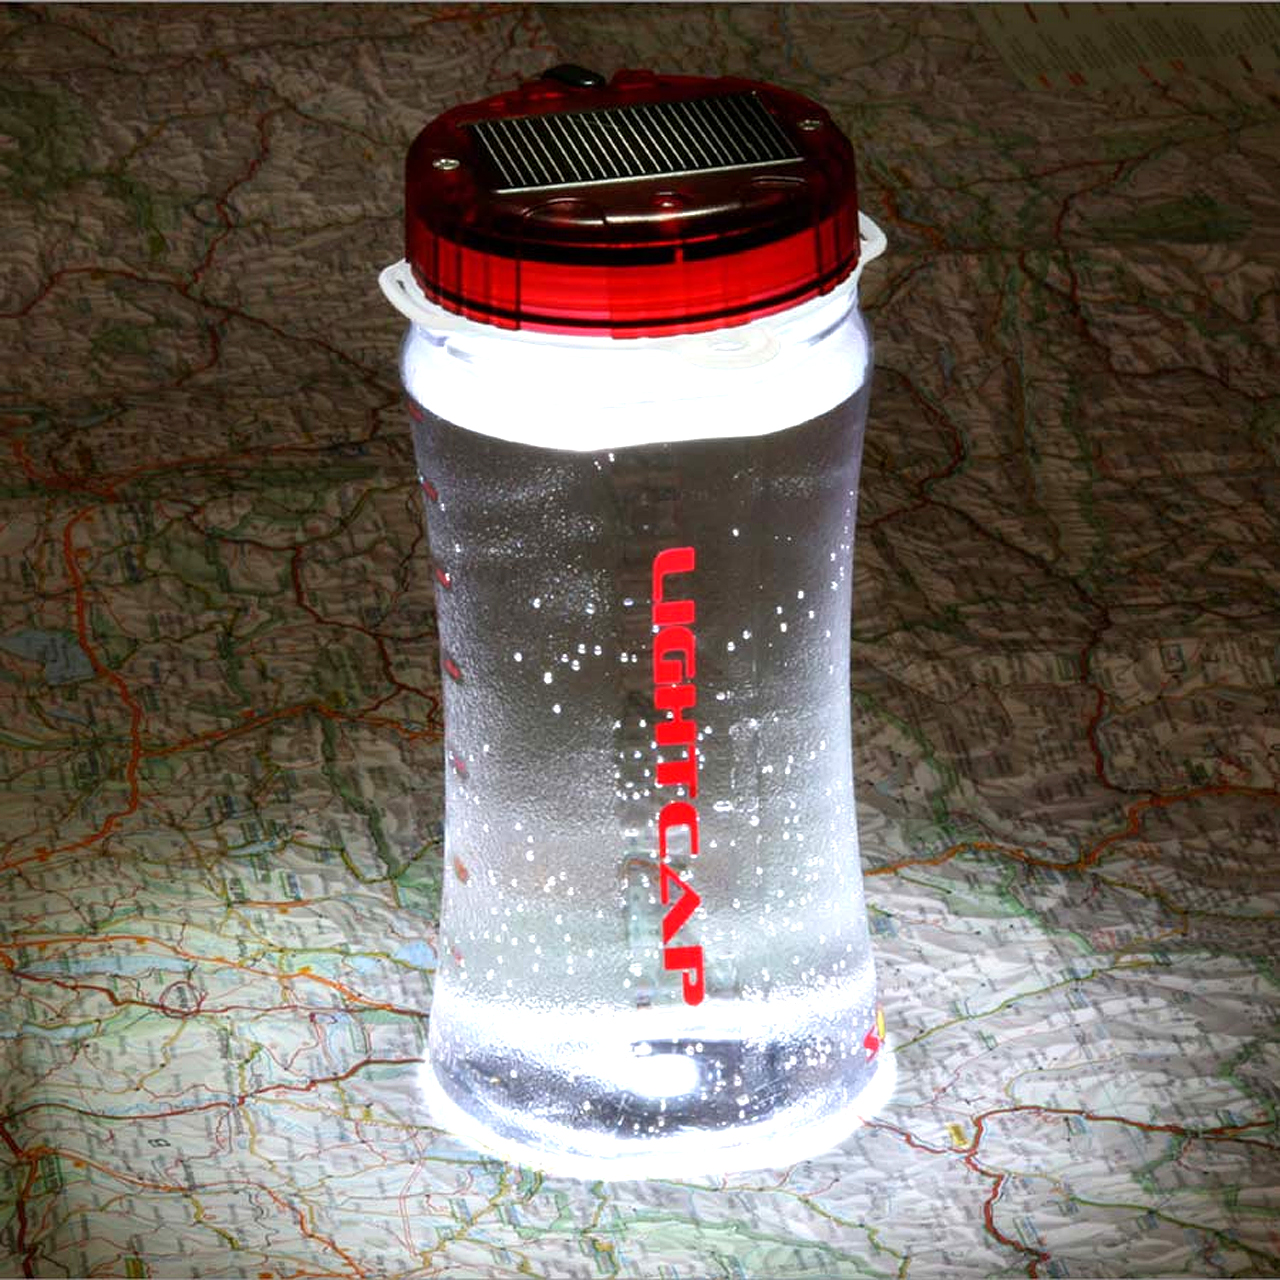 https://offgridweb.com/wp-content/uploads/2015/12/Water-bottle-lantern-02.jpg